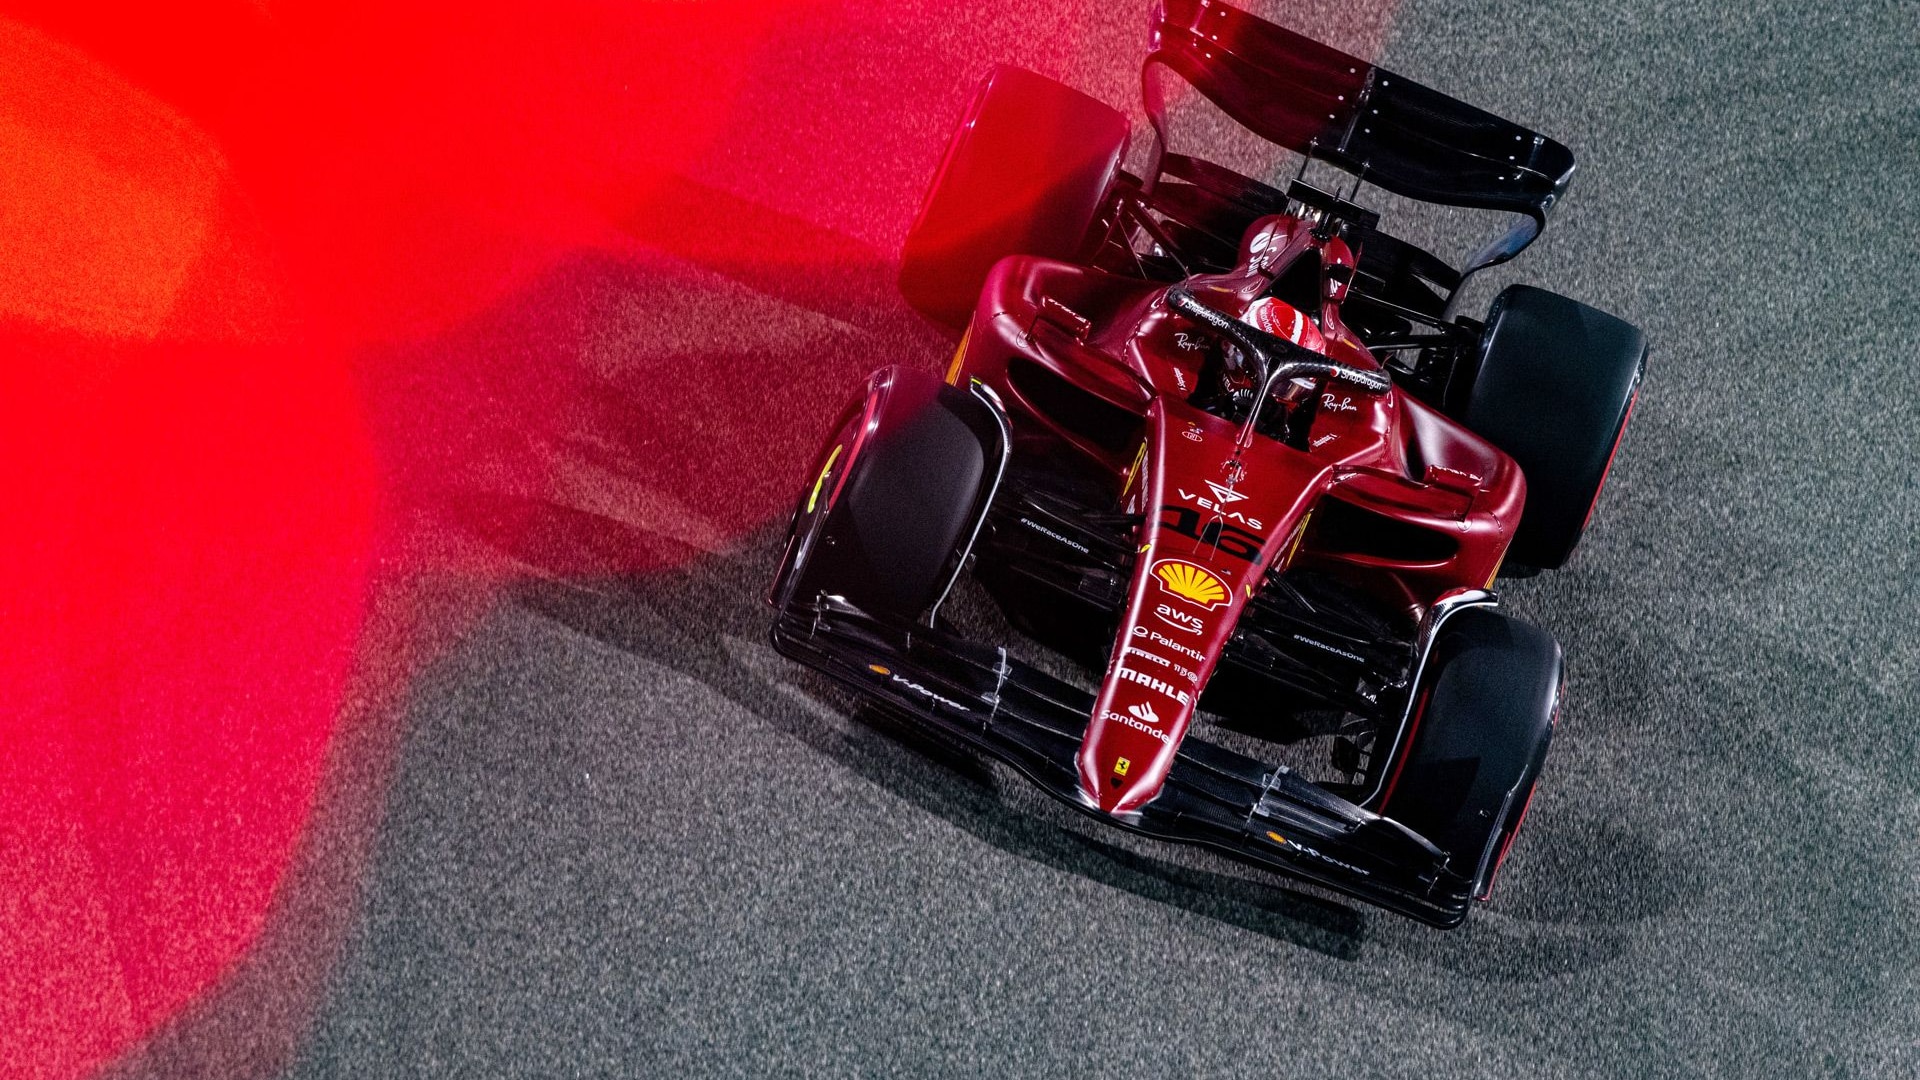 Bahrain Grand Prix: Ferrari dominates as Charles Leclerc wins